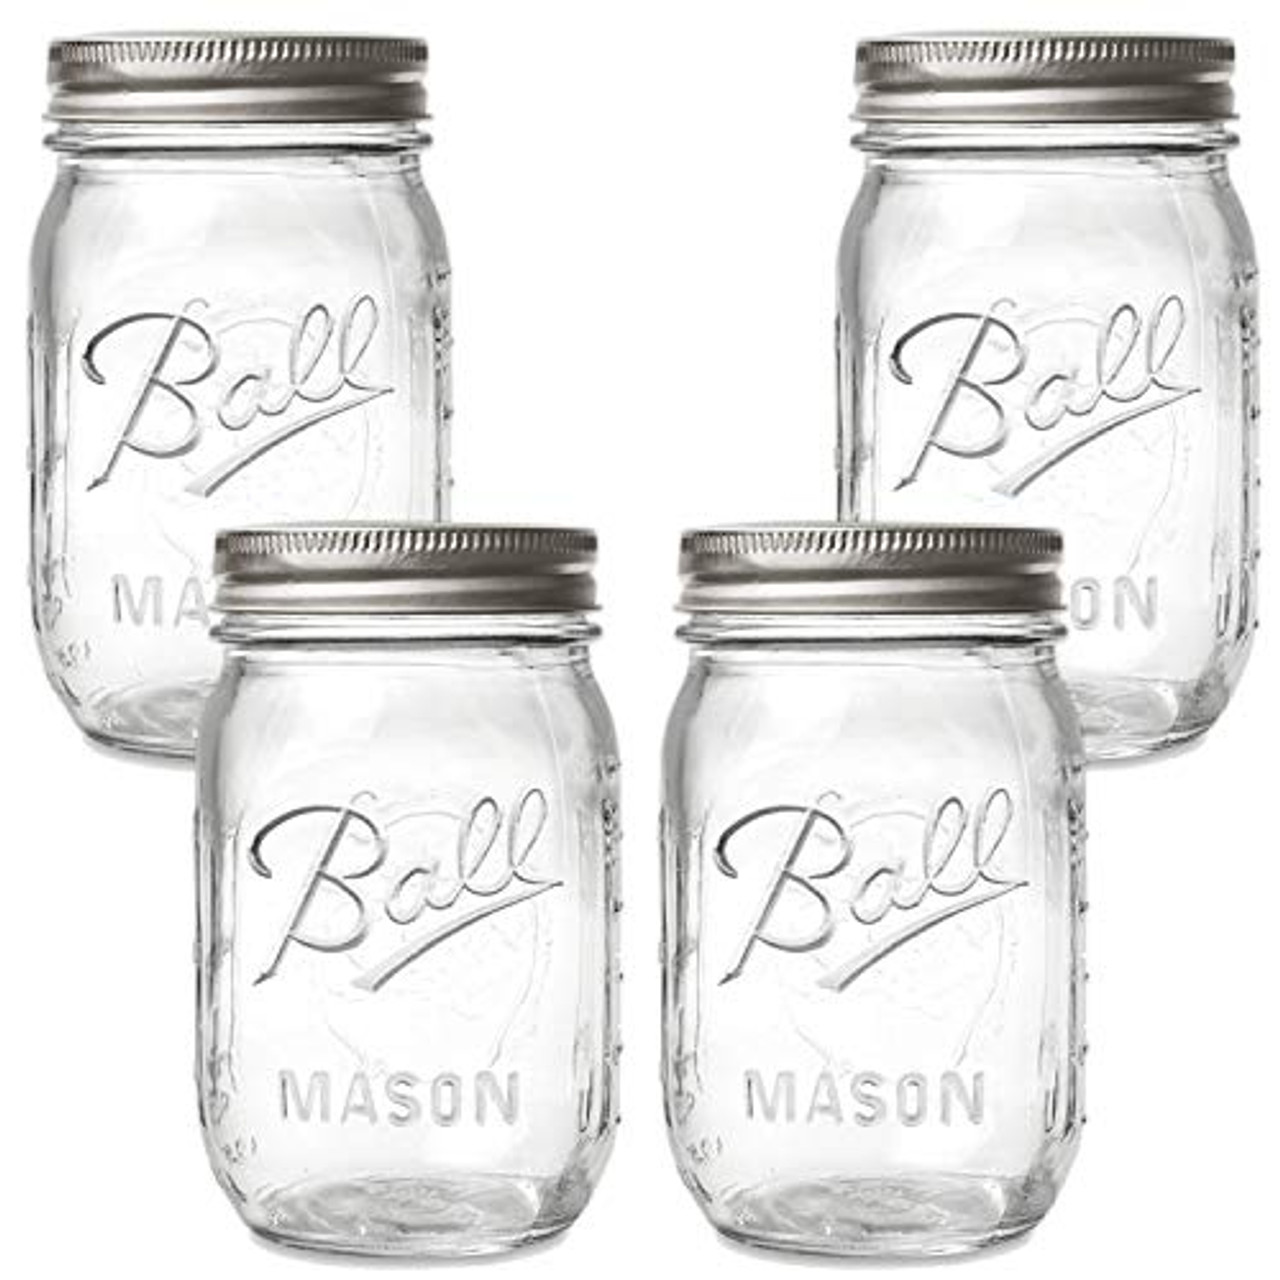 Ball Regular Mouth Mason Jars 32 oz 4 Pack With mason jar lids and